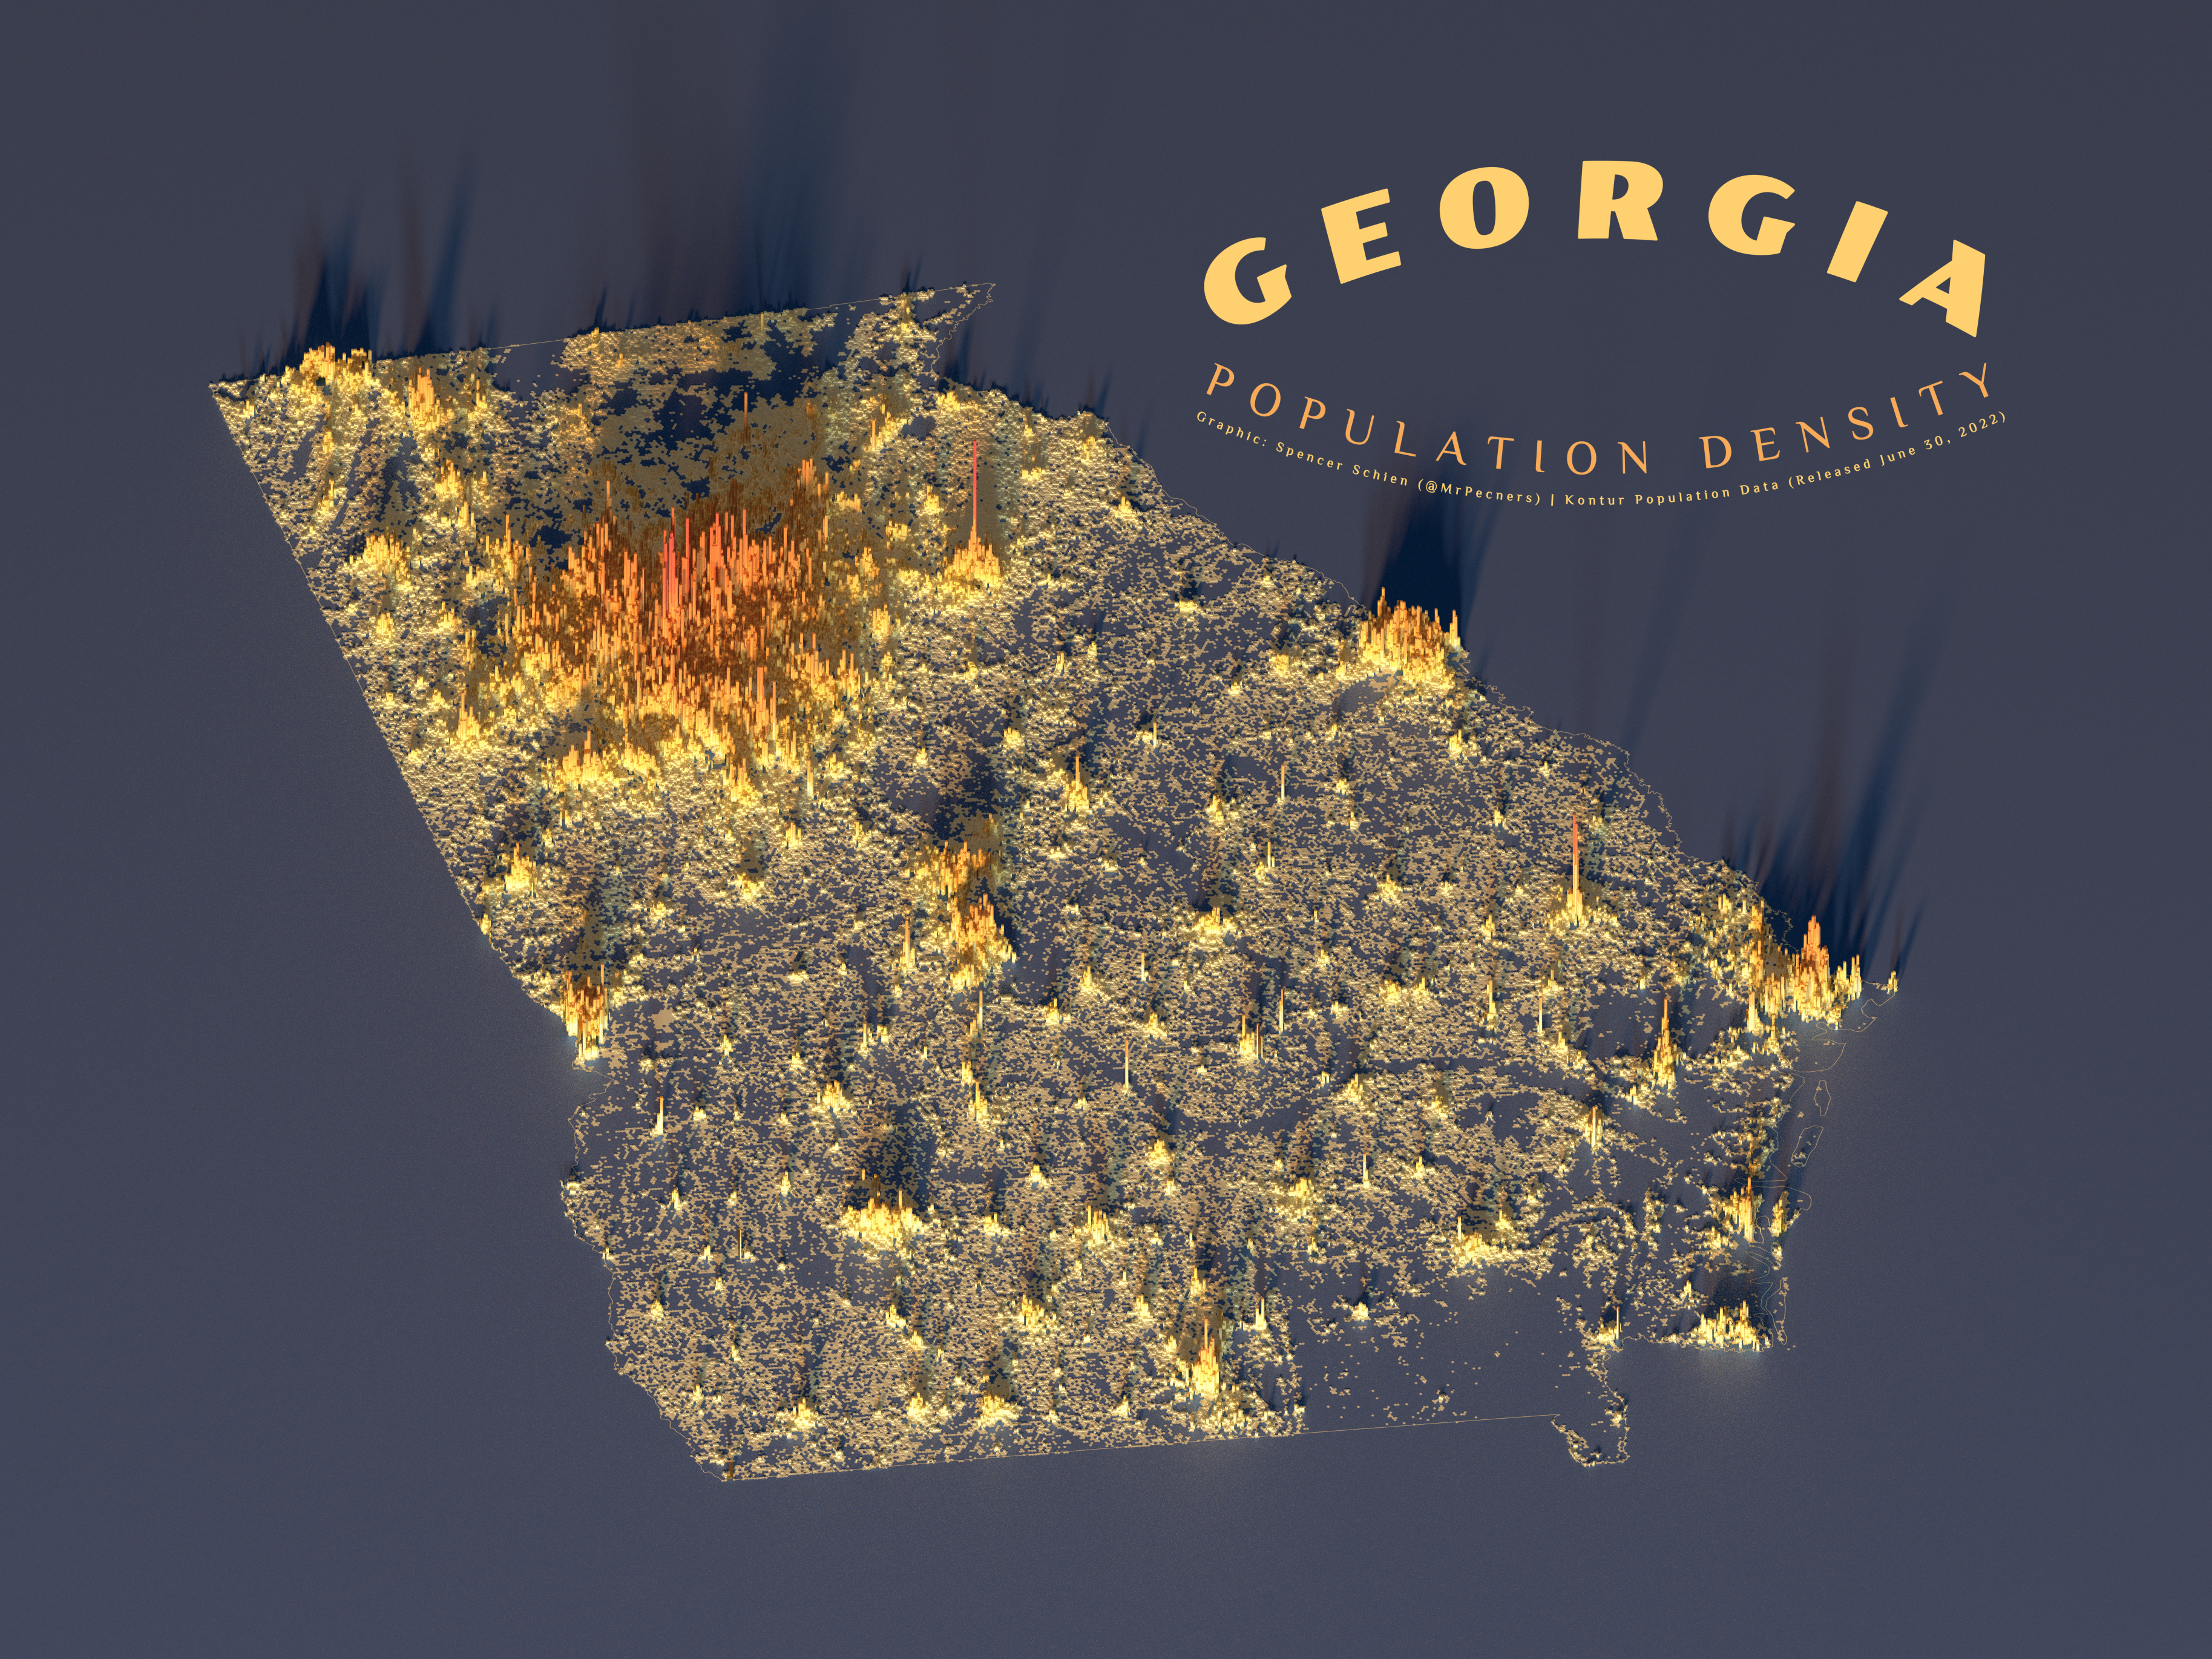 Georgia Population Density